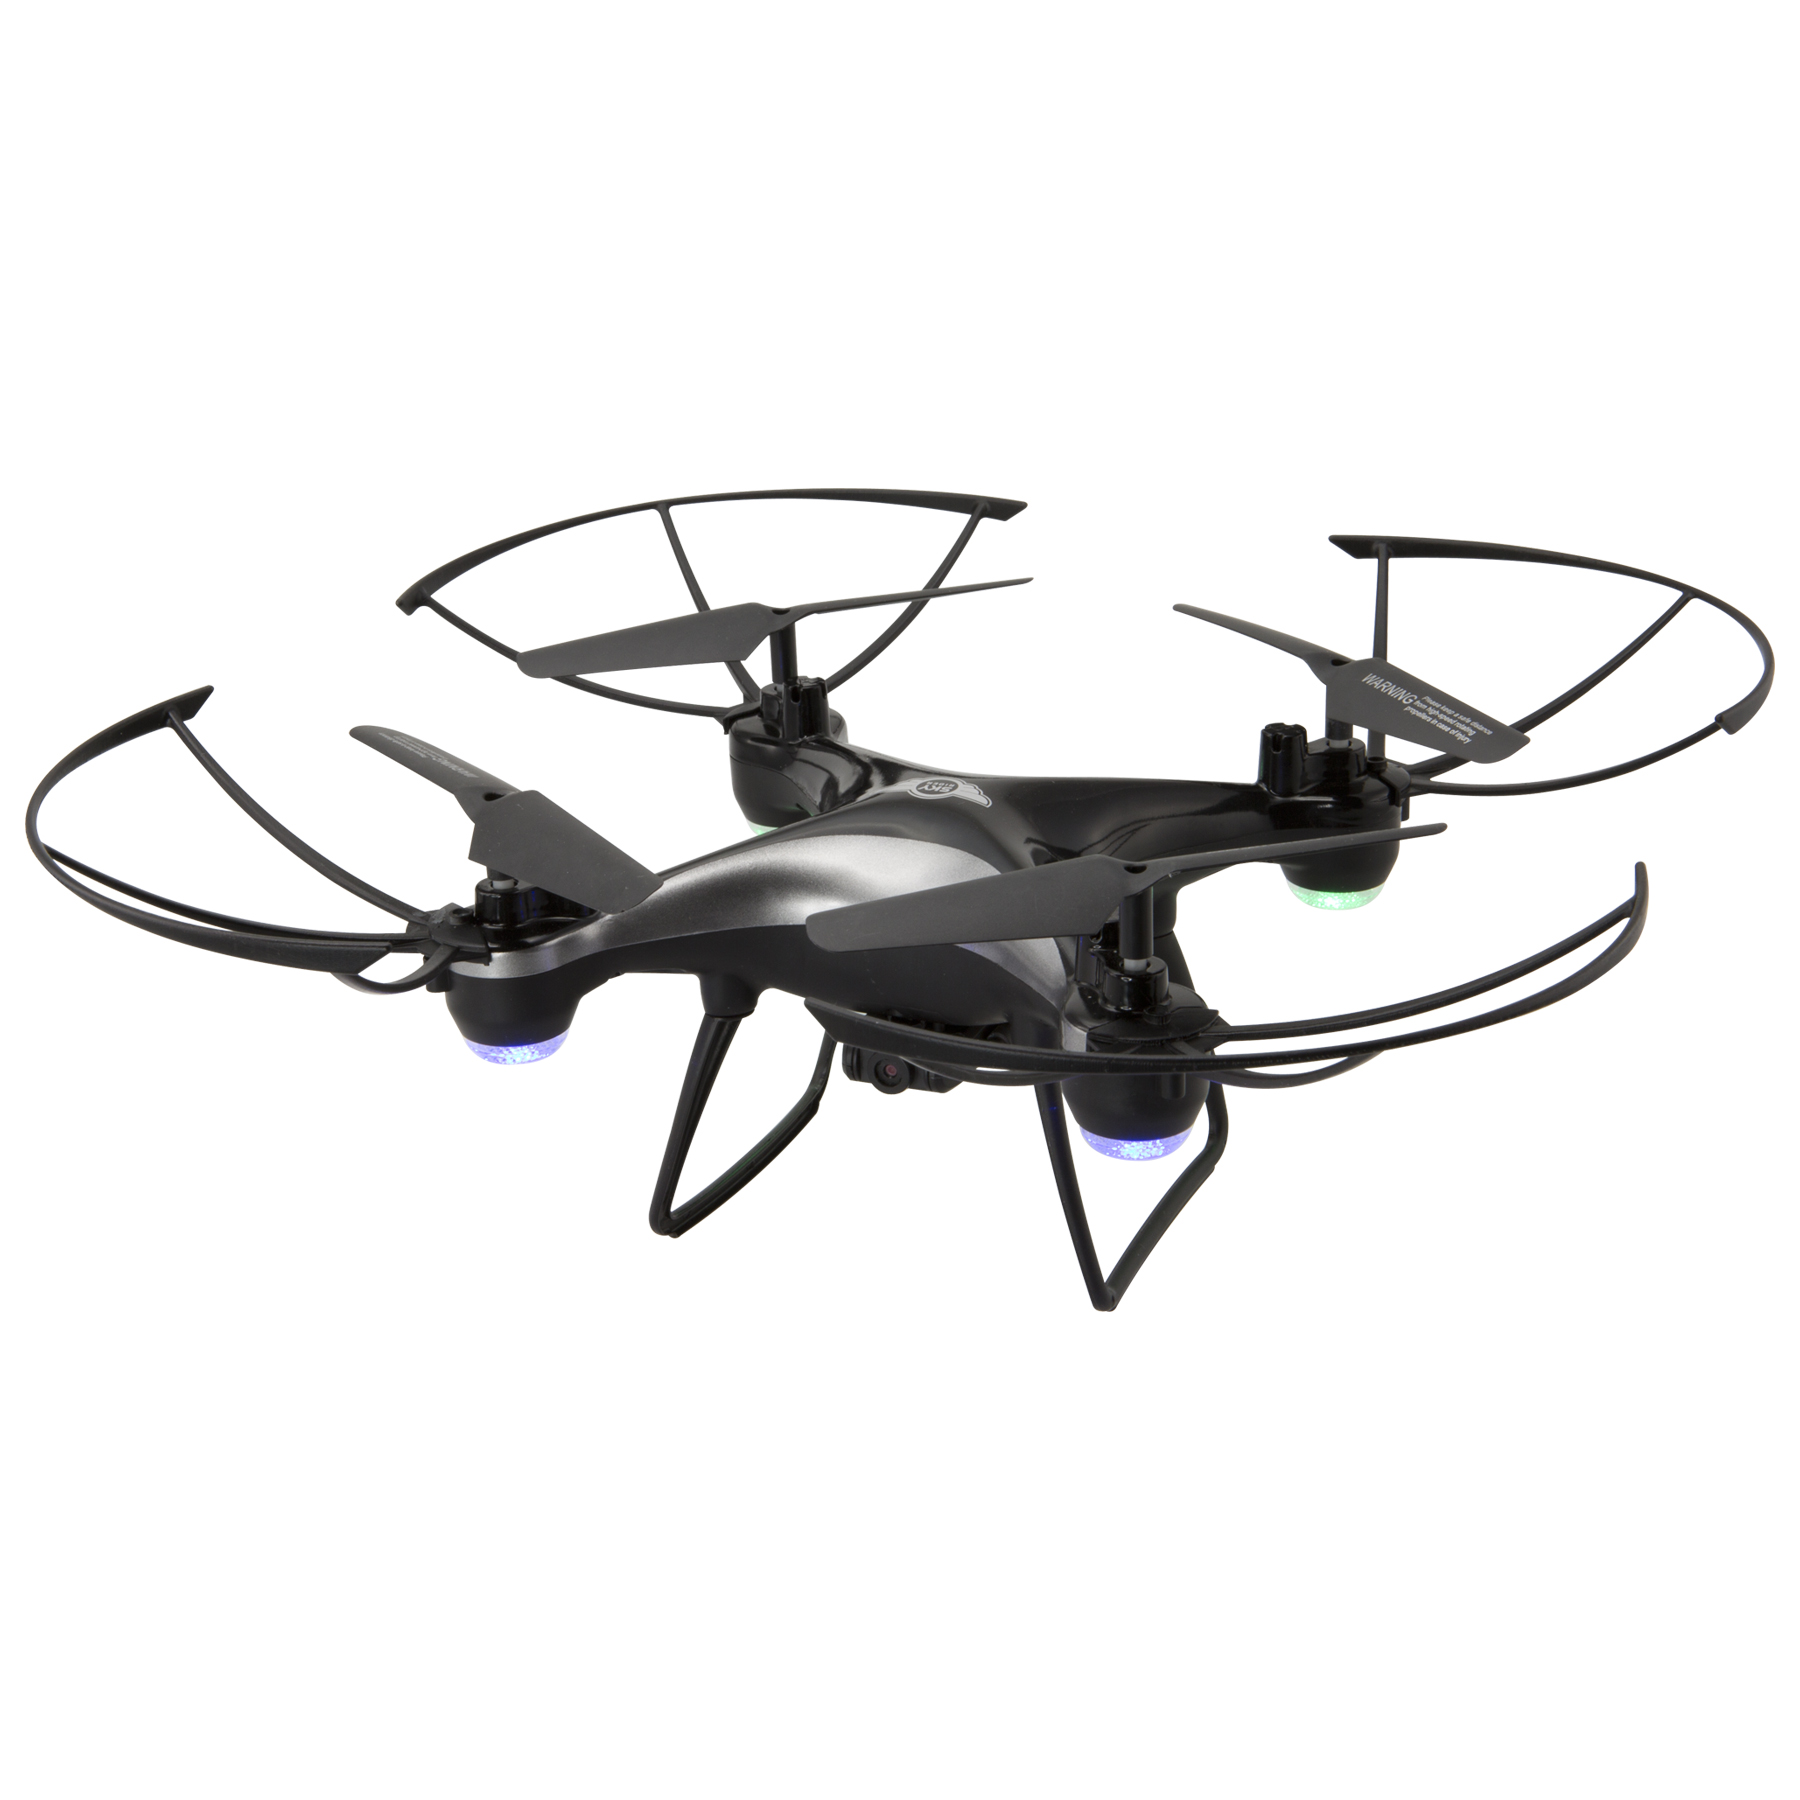 Sky Rider Thunderbird Quadcopter Drone with Wi-Fi Camera, DRW389, Black - image 1 of 5